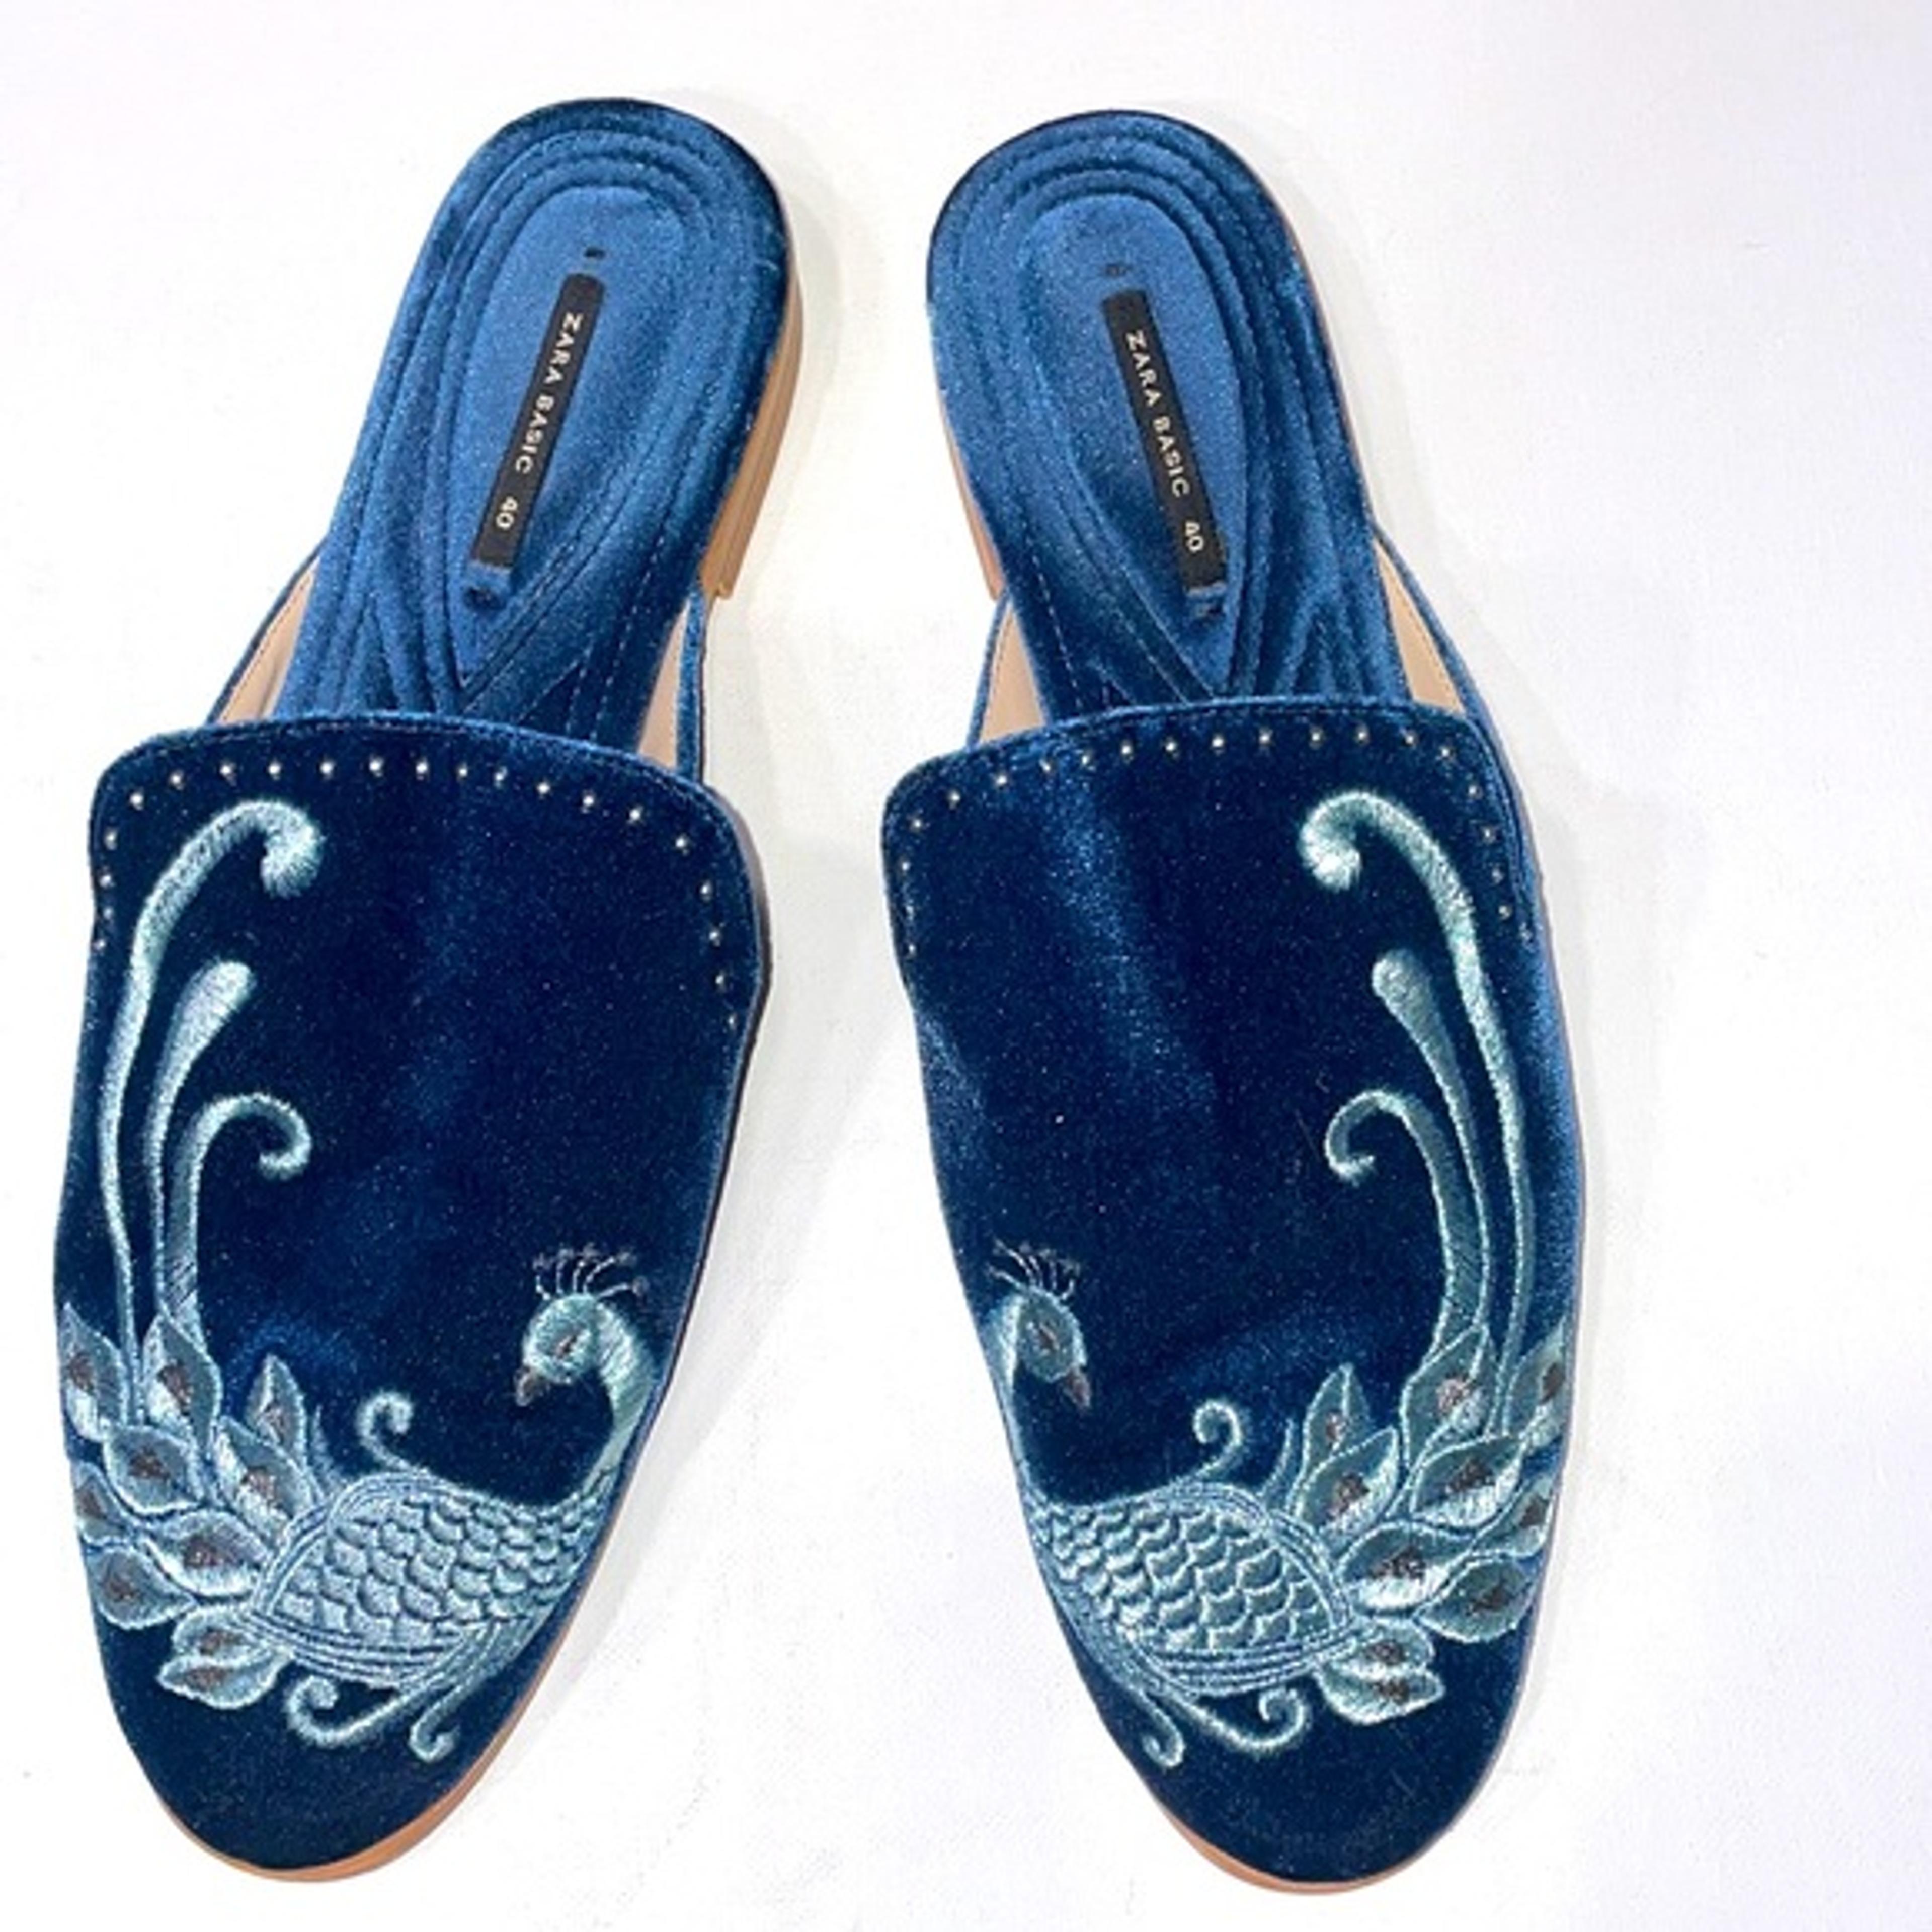 Zara | Shoes | Zara Dragon Embroidered Blue Velvet Mules Size 4 | Poshmark